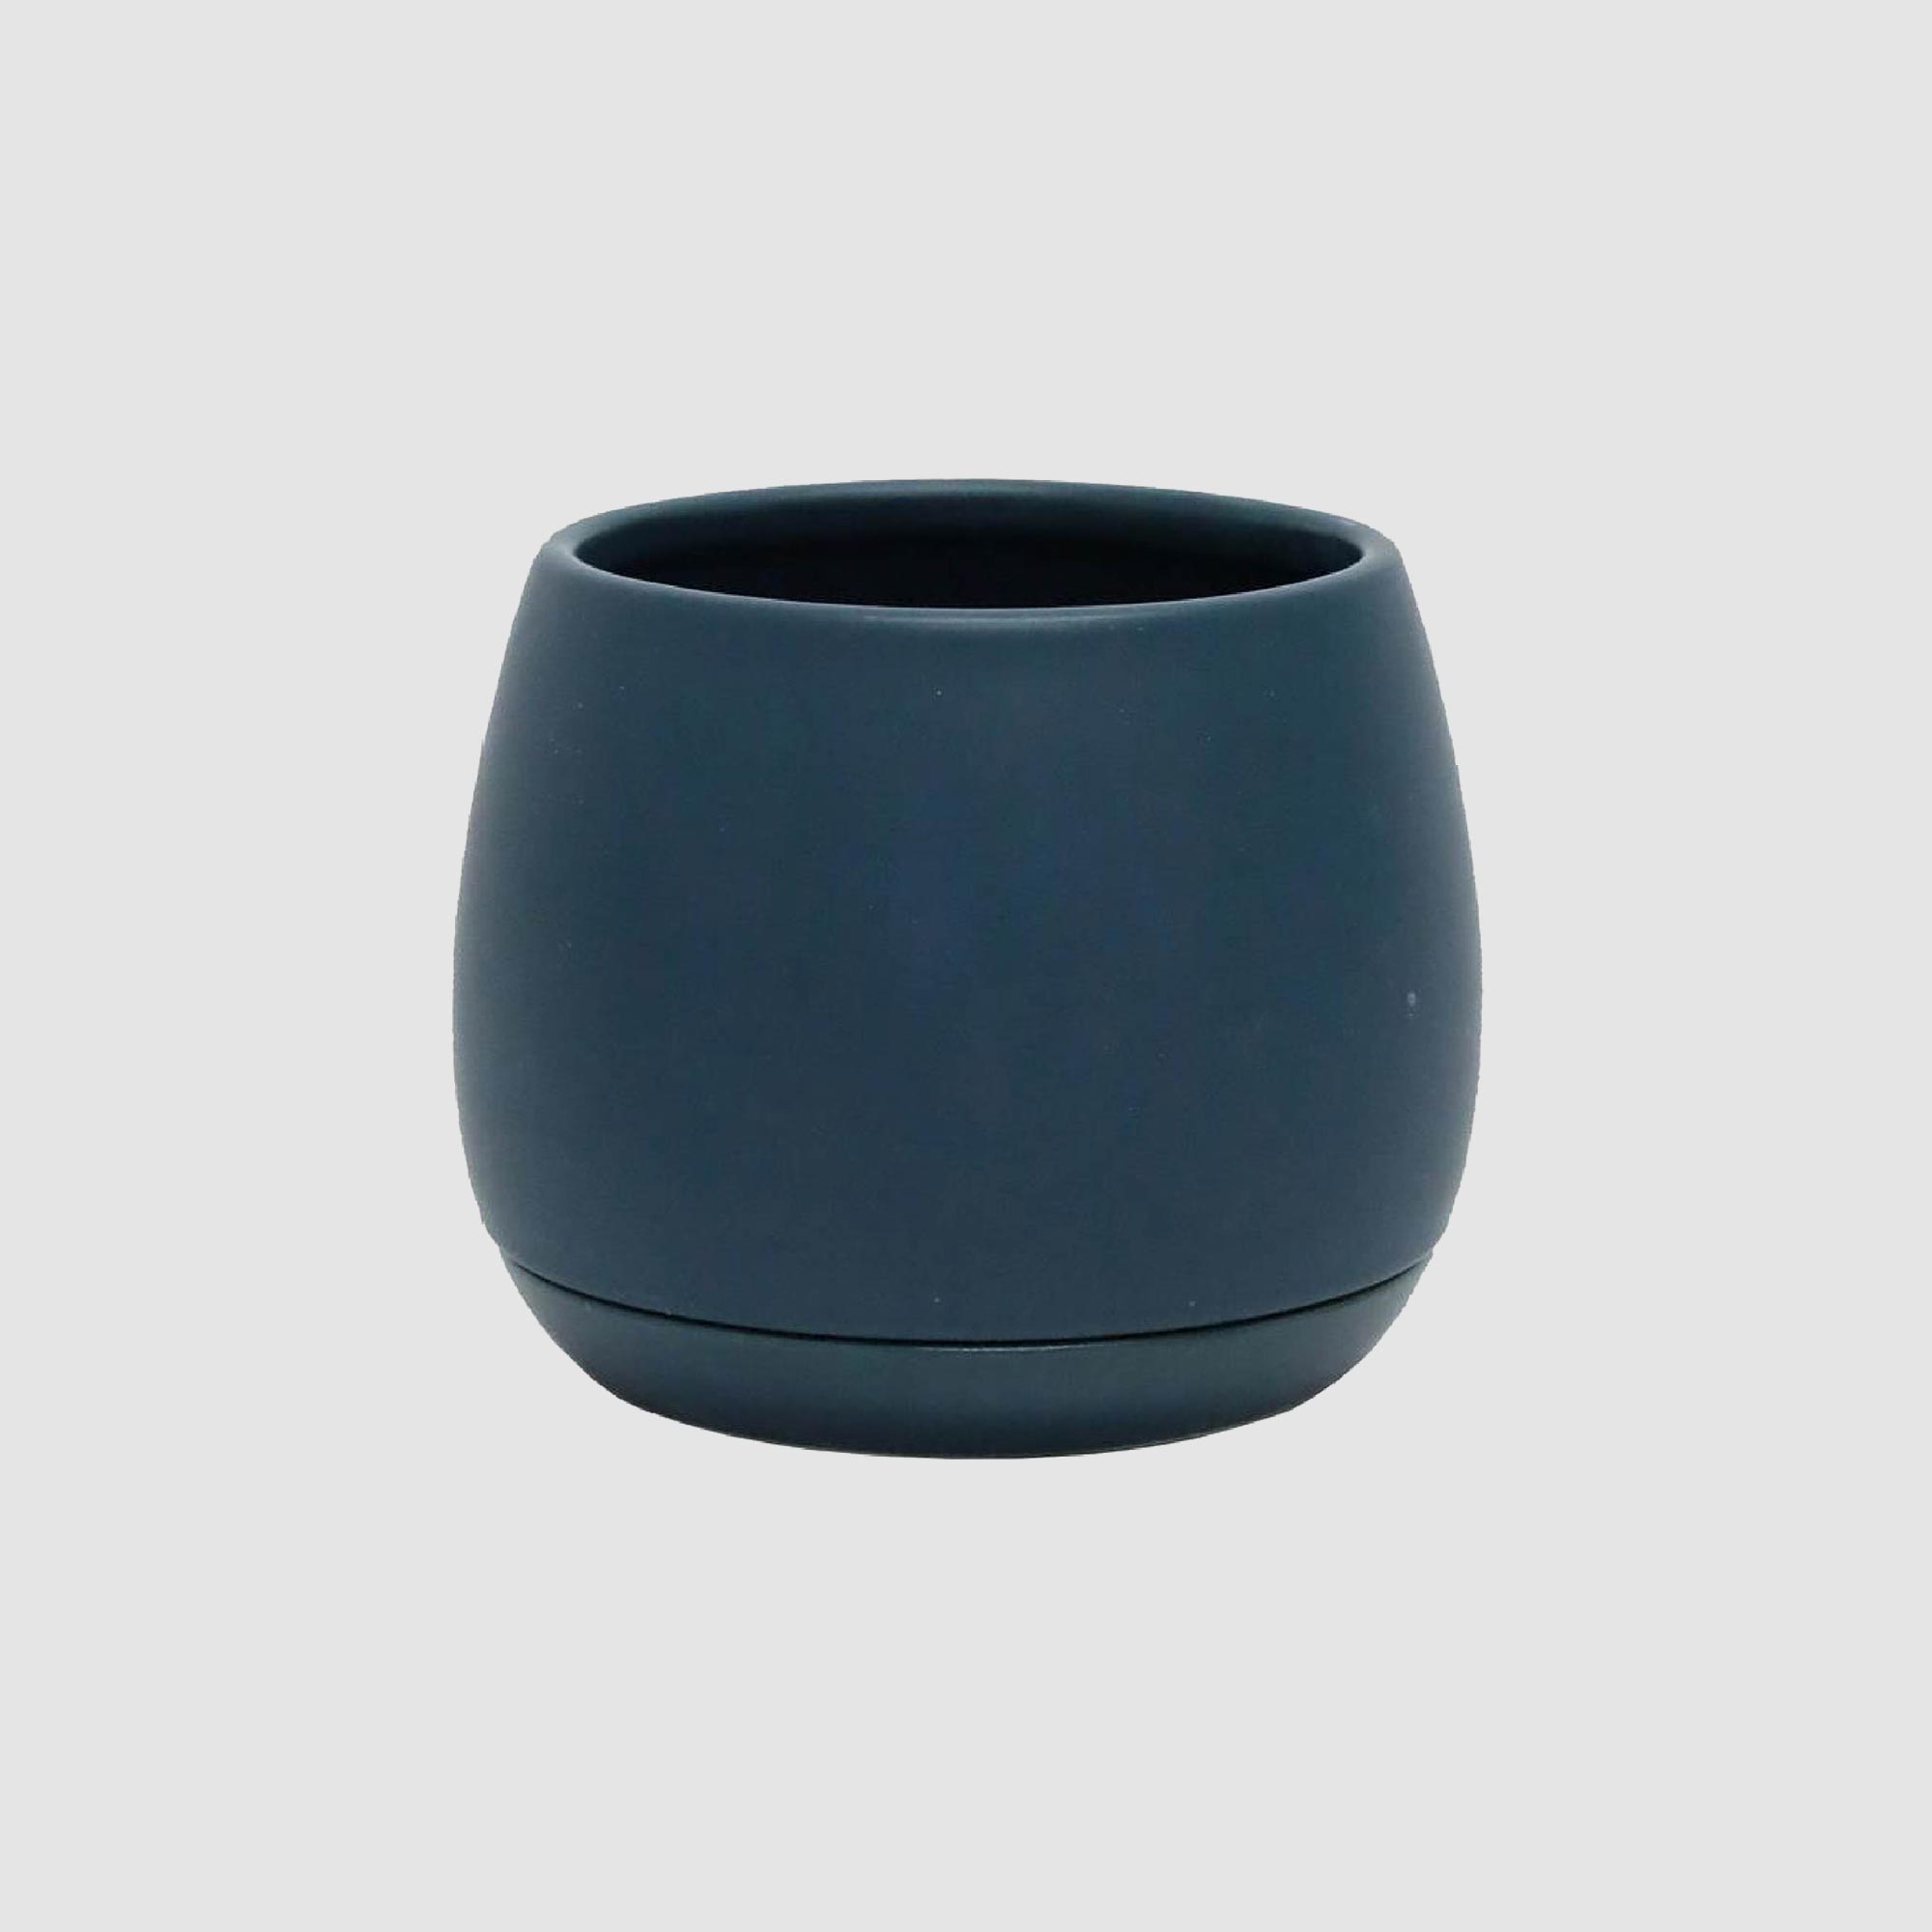 Boston Living Ceramic Planter Pots Round Blue 